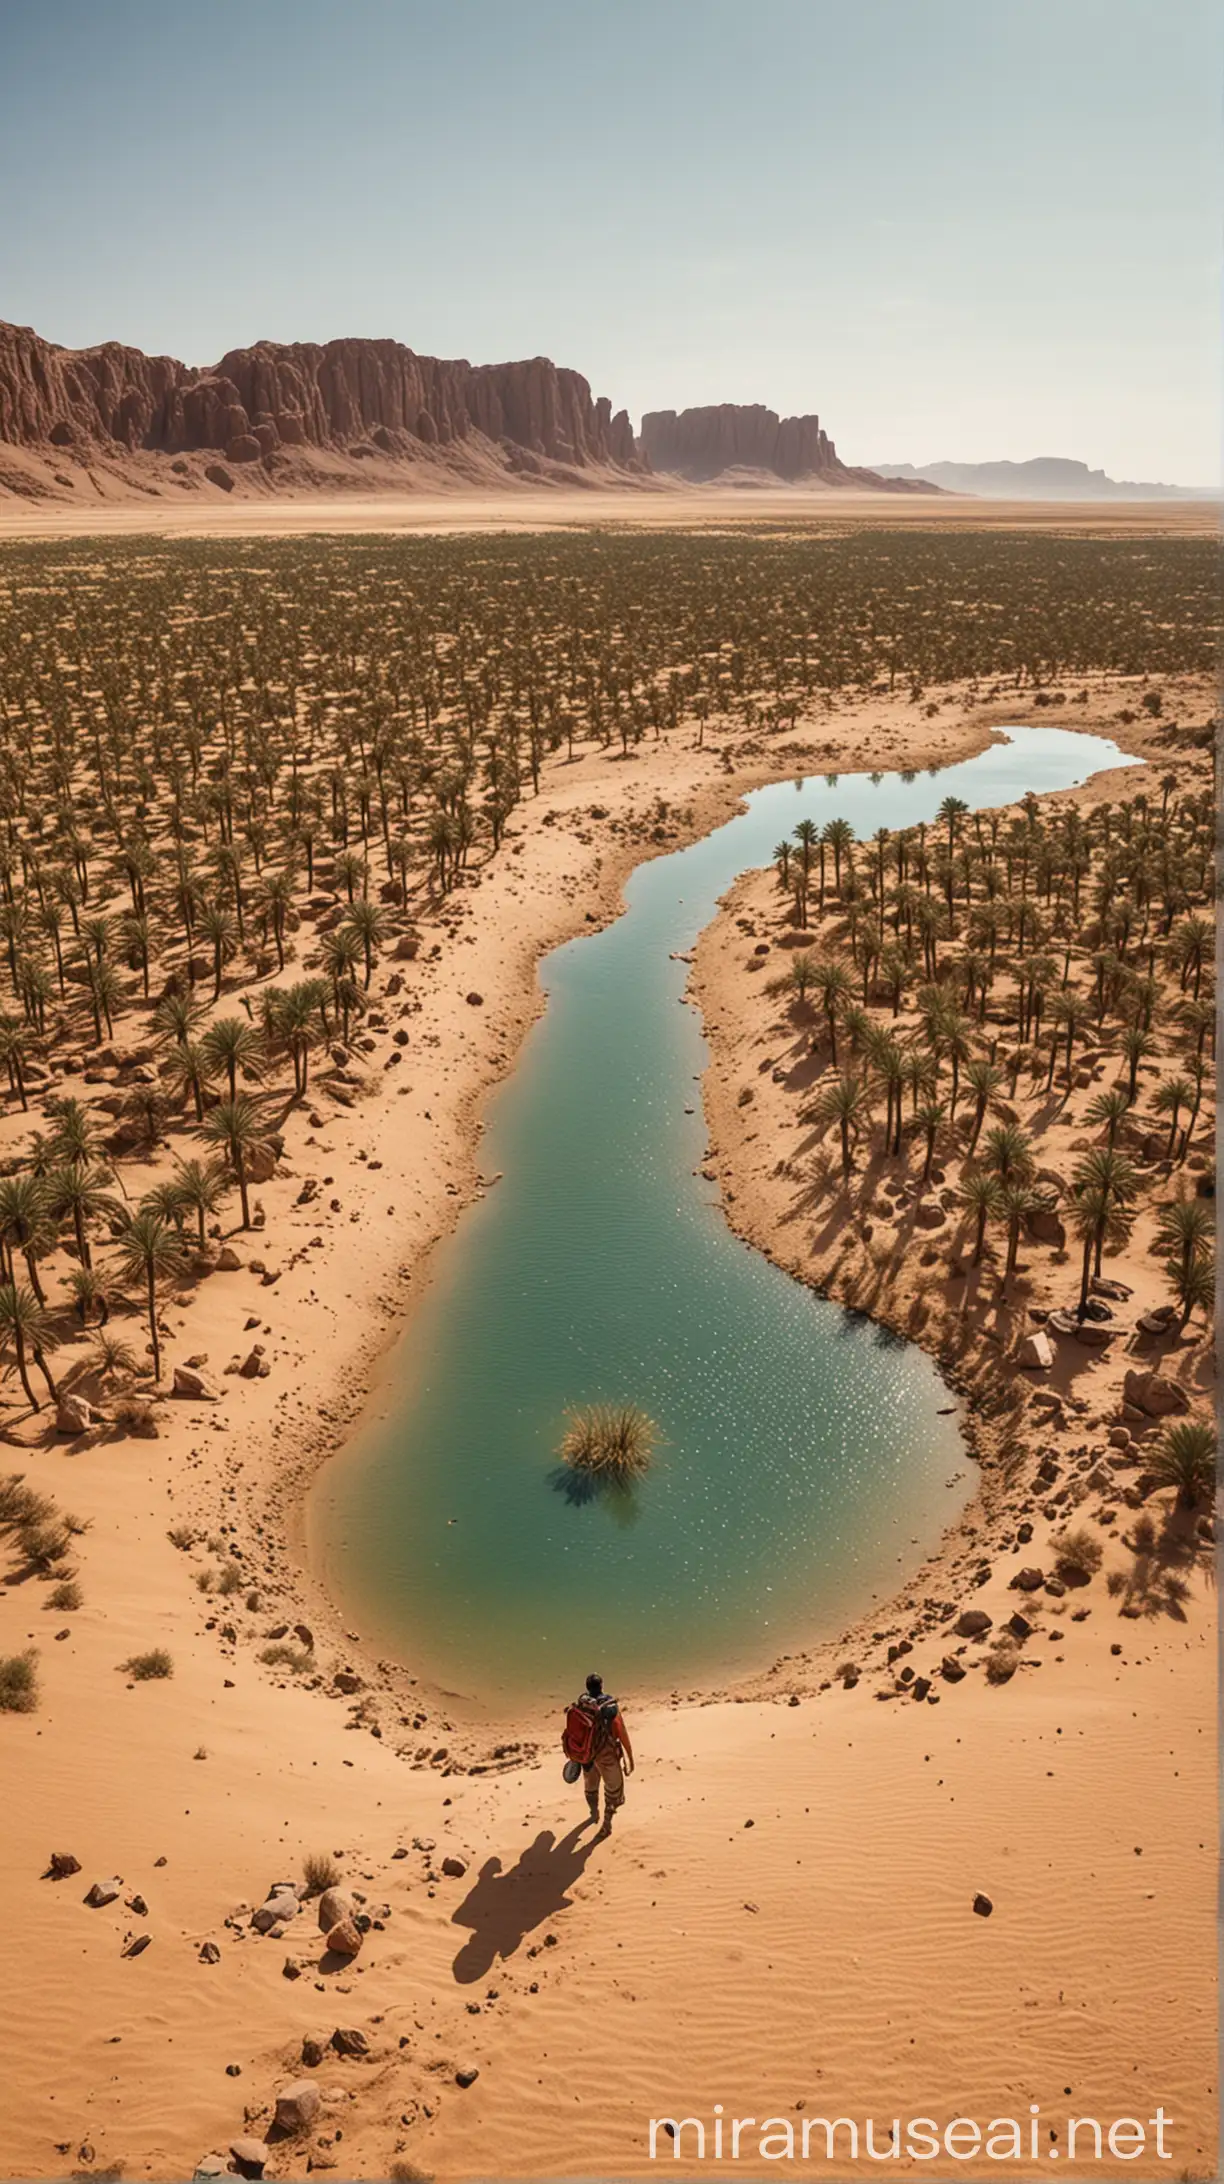 Lost Traveler Discovers Oasis in Desert Landscape